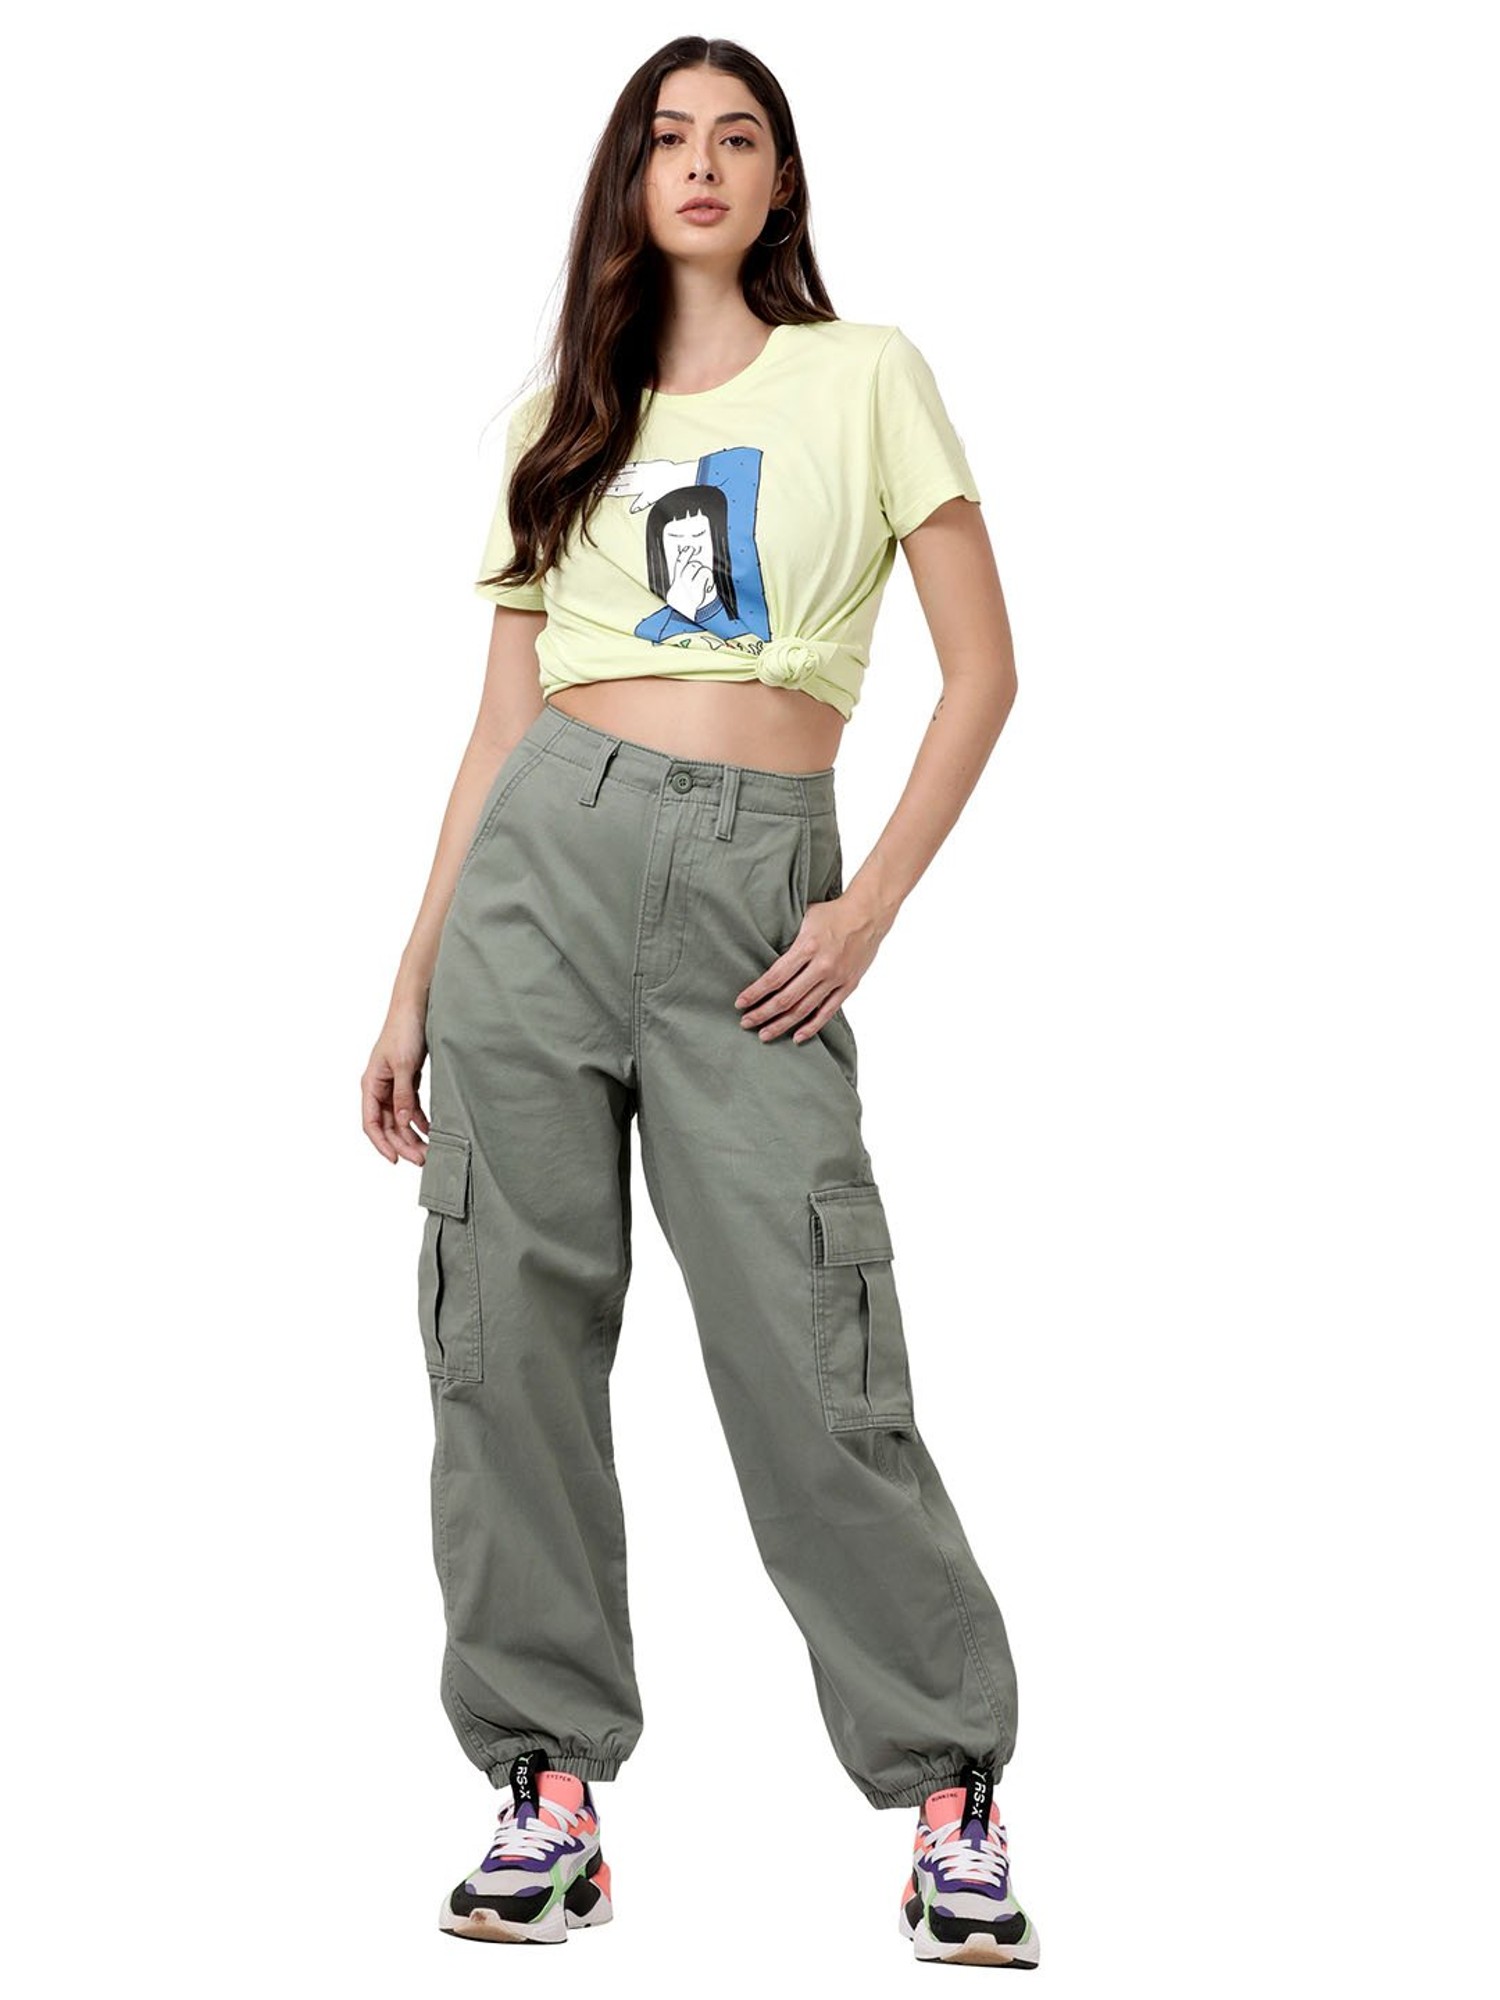 Levis Workwear Cargo Pants Online  decisiontreecom 1692669918